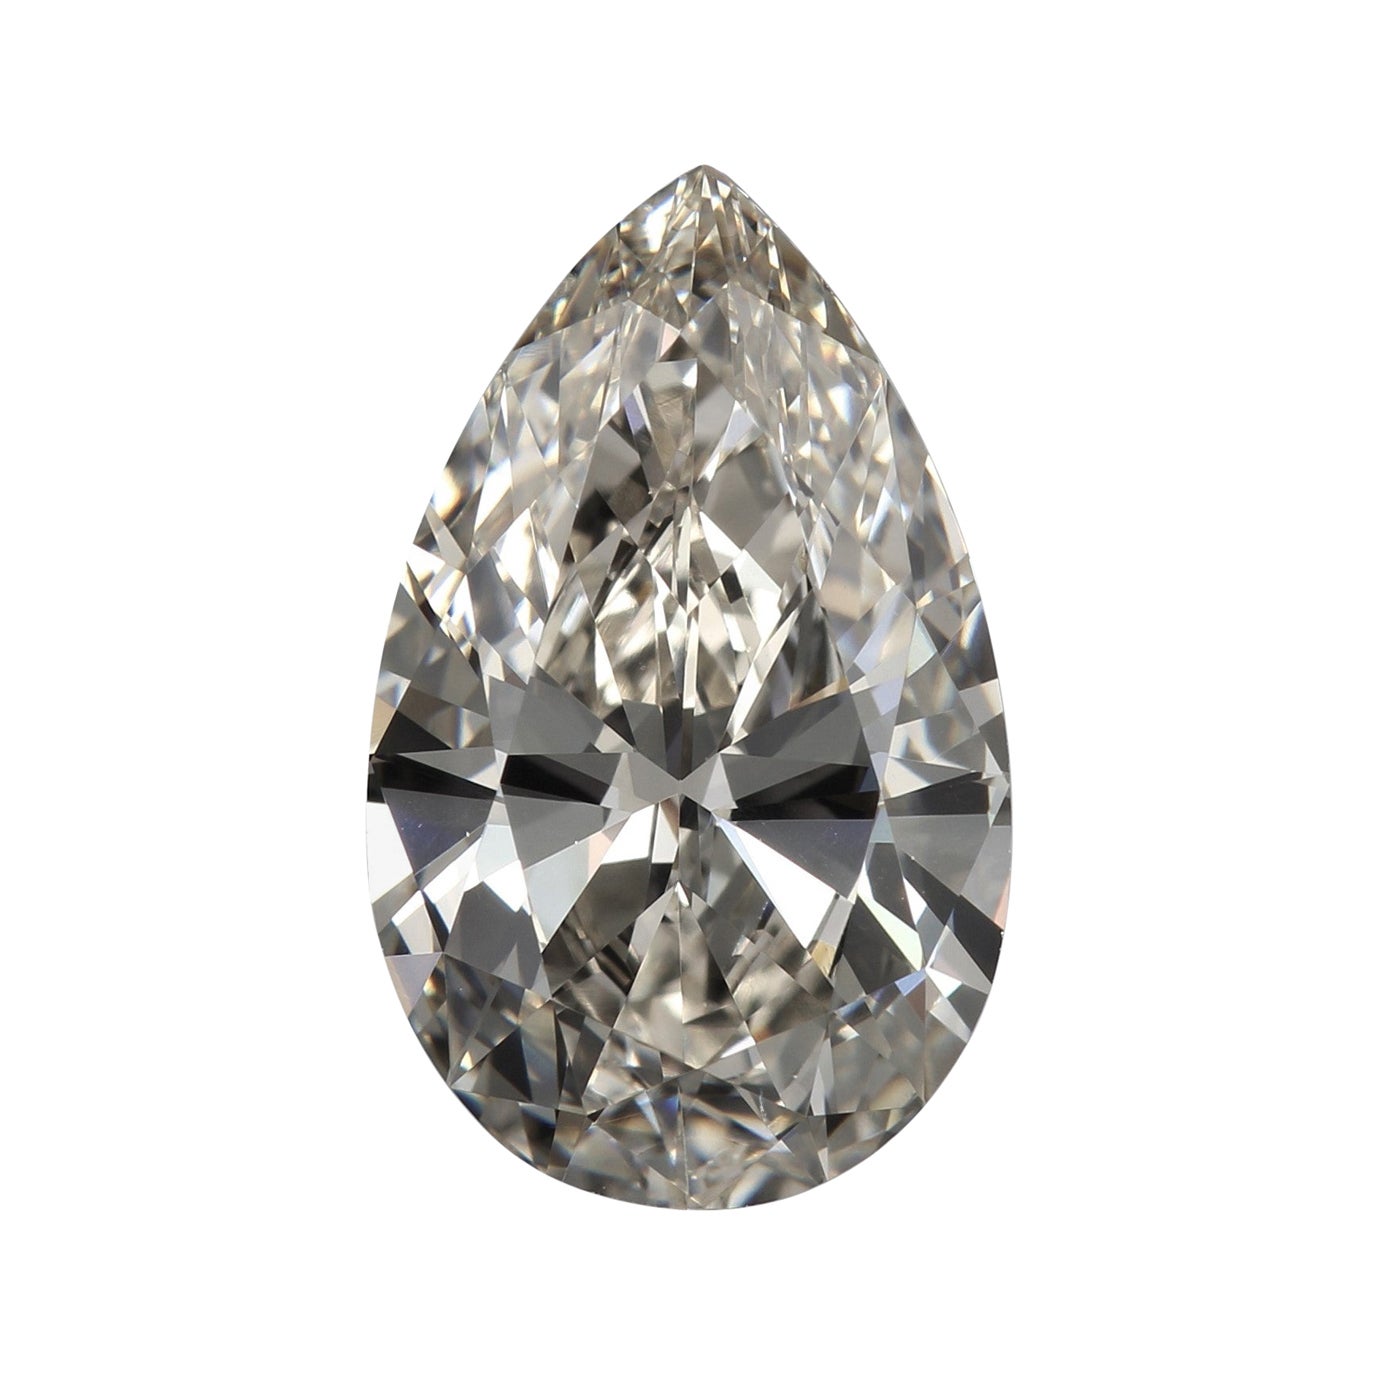 Alexander GIA Certified 5.16 Carat J VS2 Pear Cut Diamond